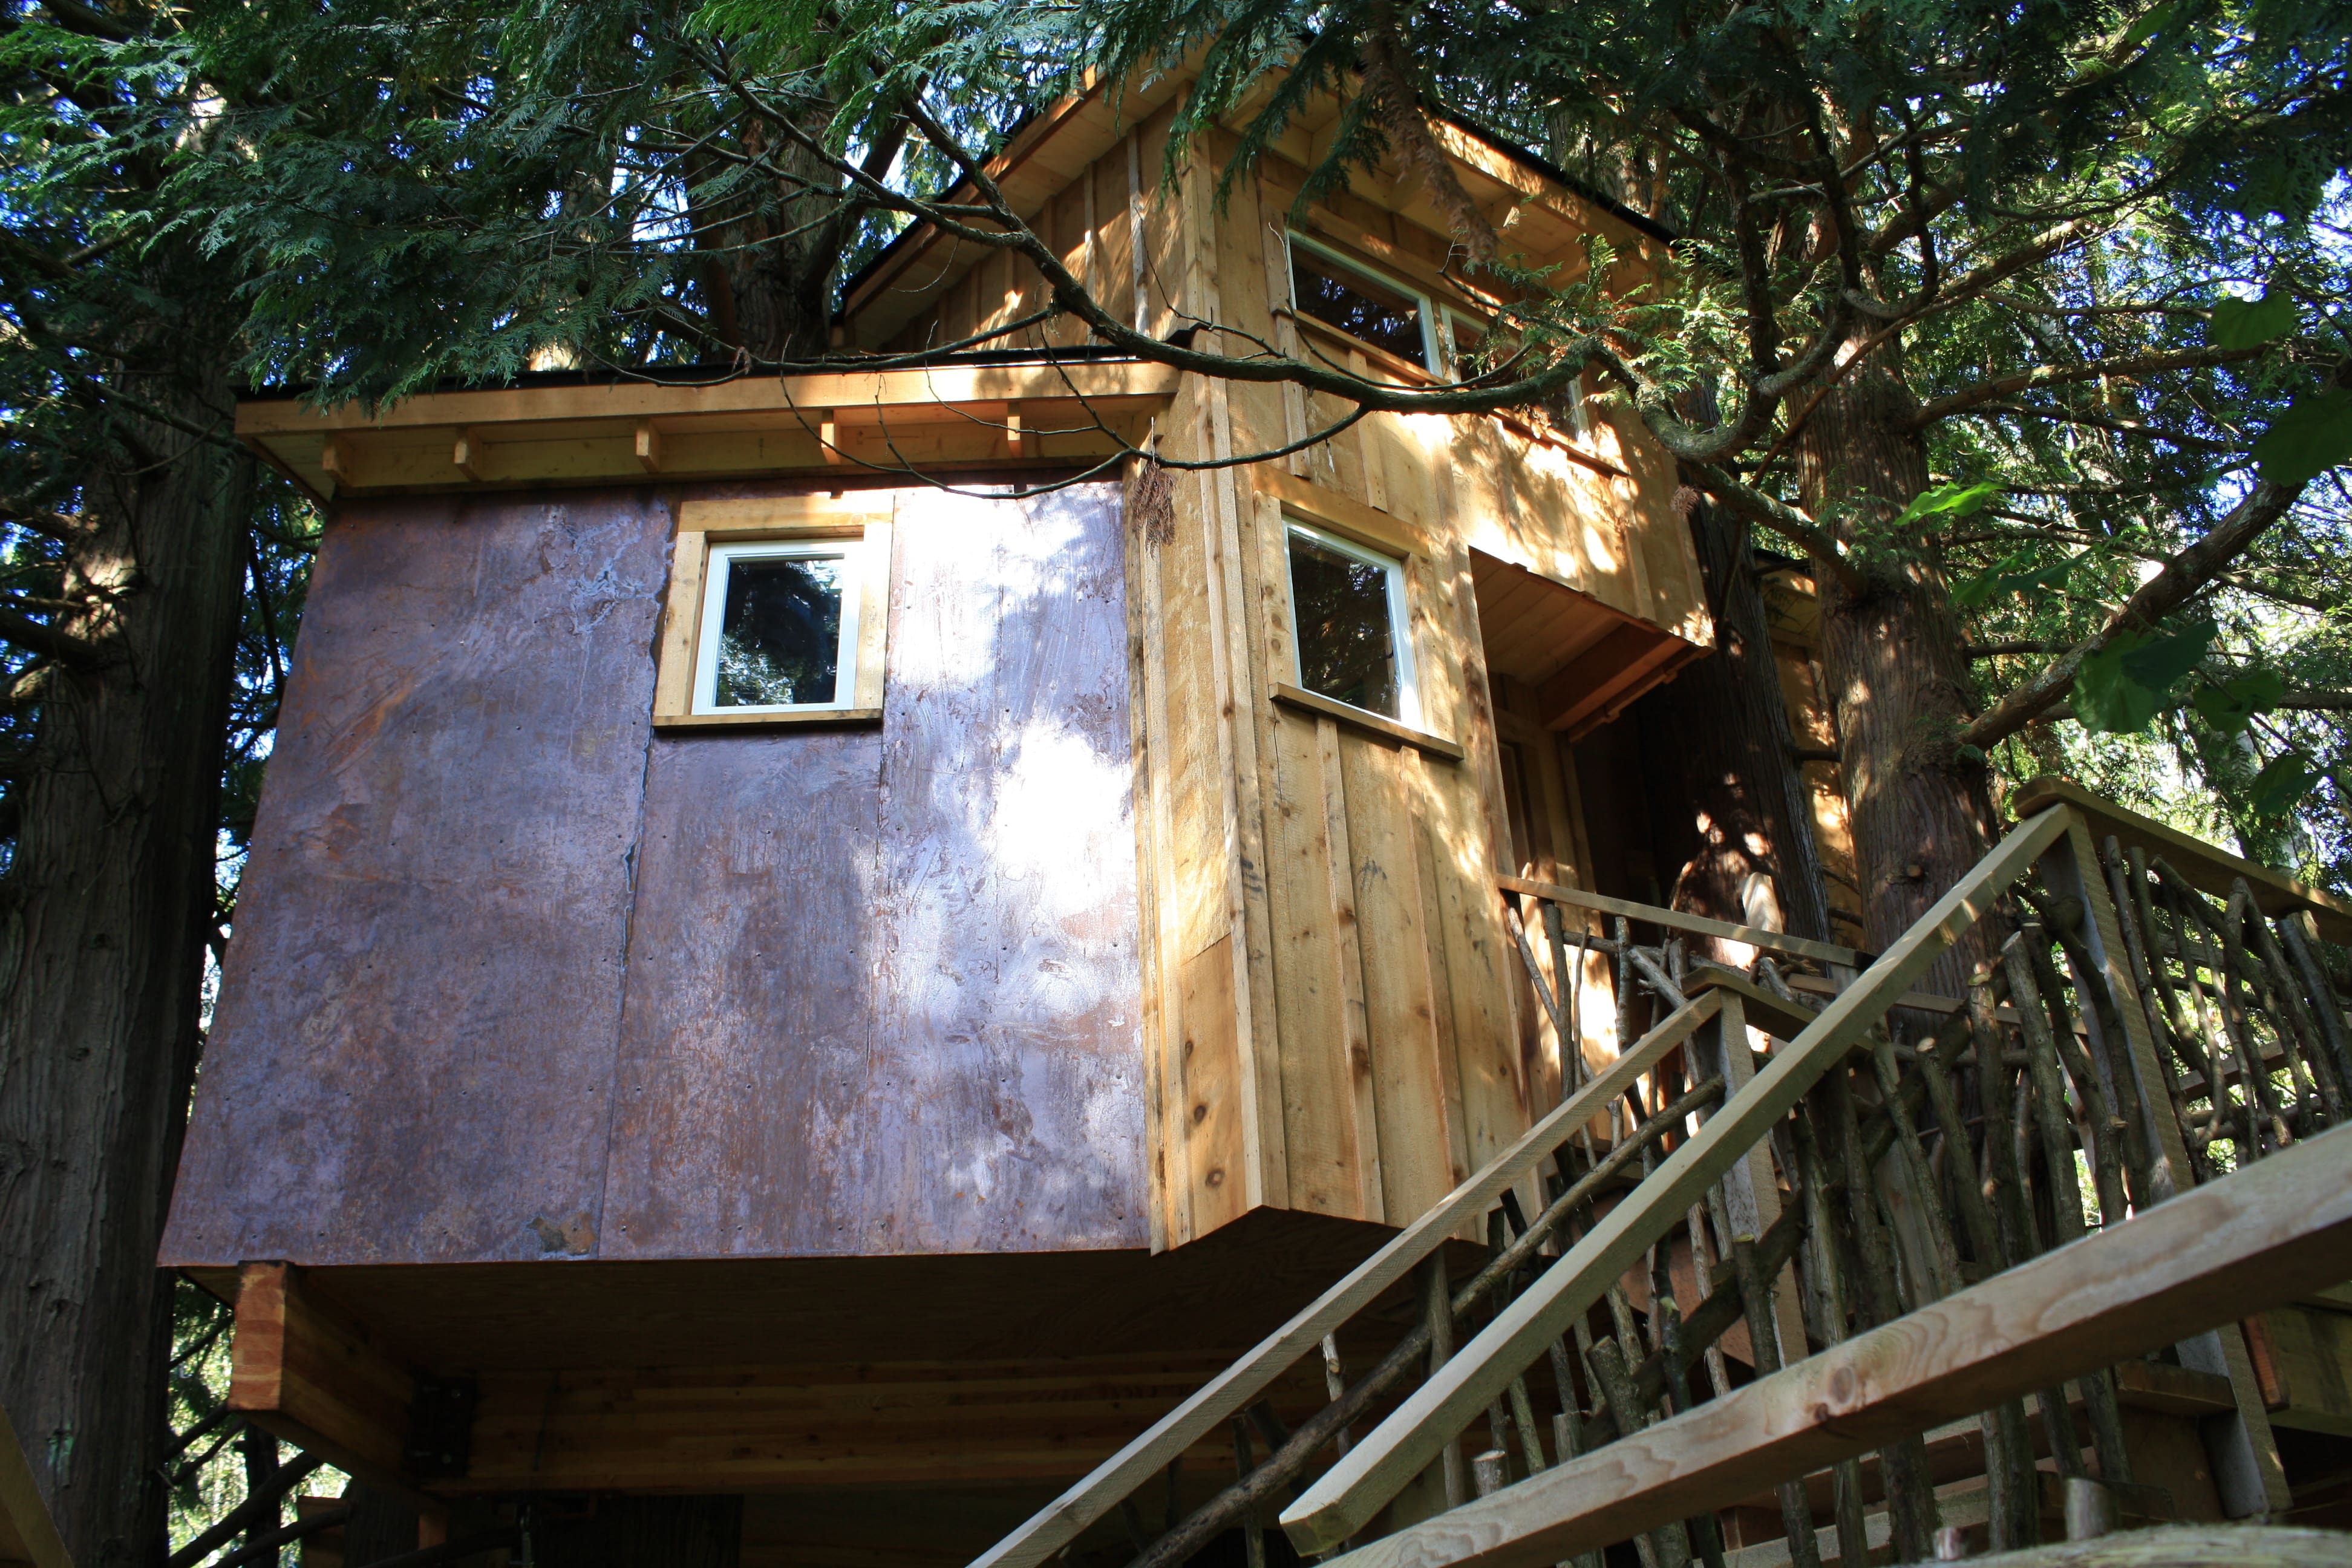 The Hadlock Treehouse